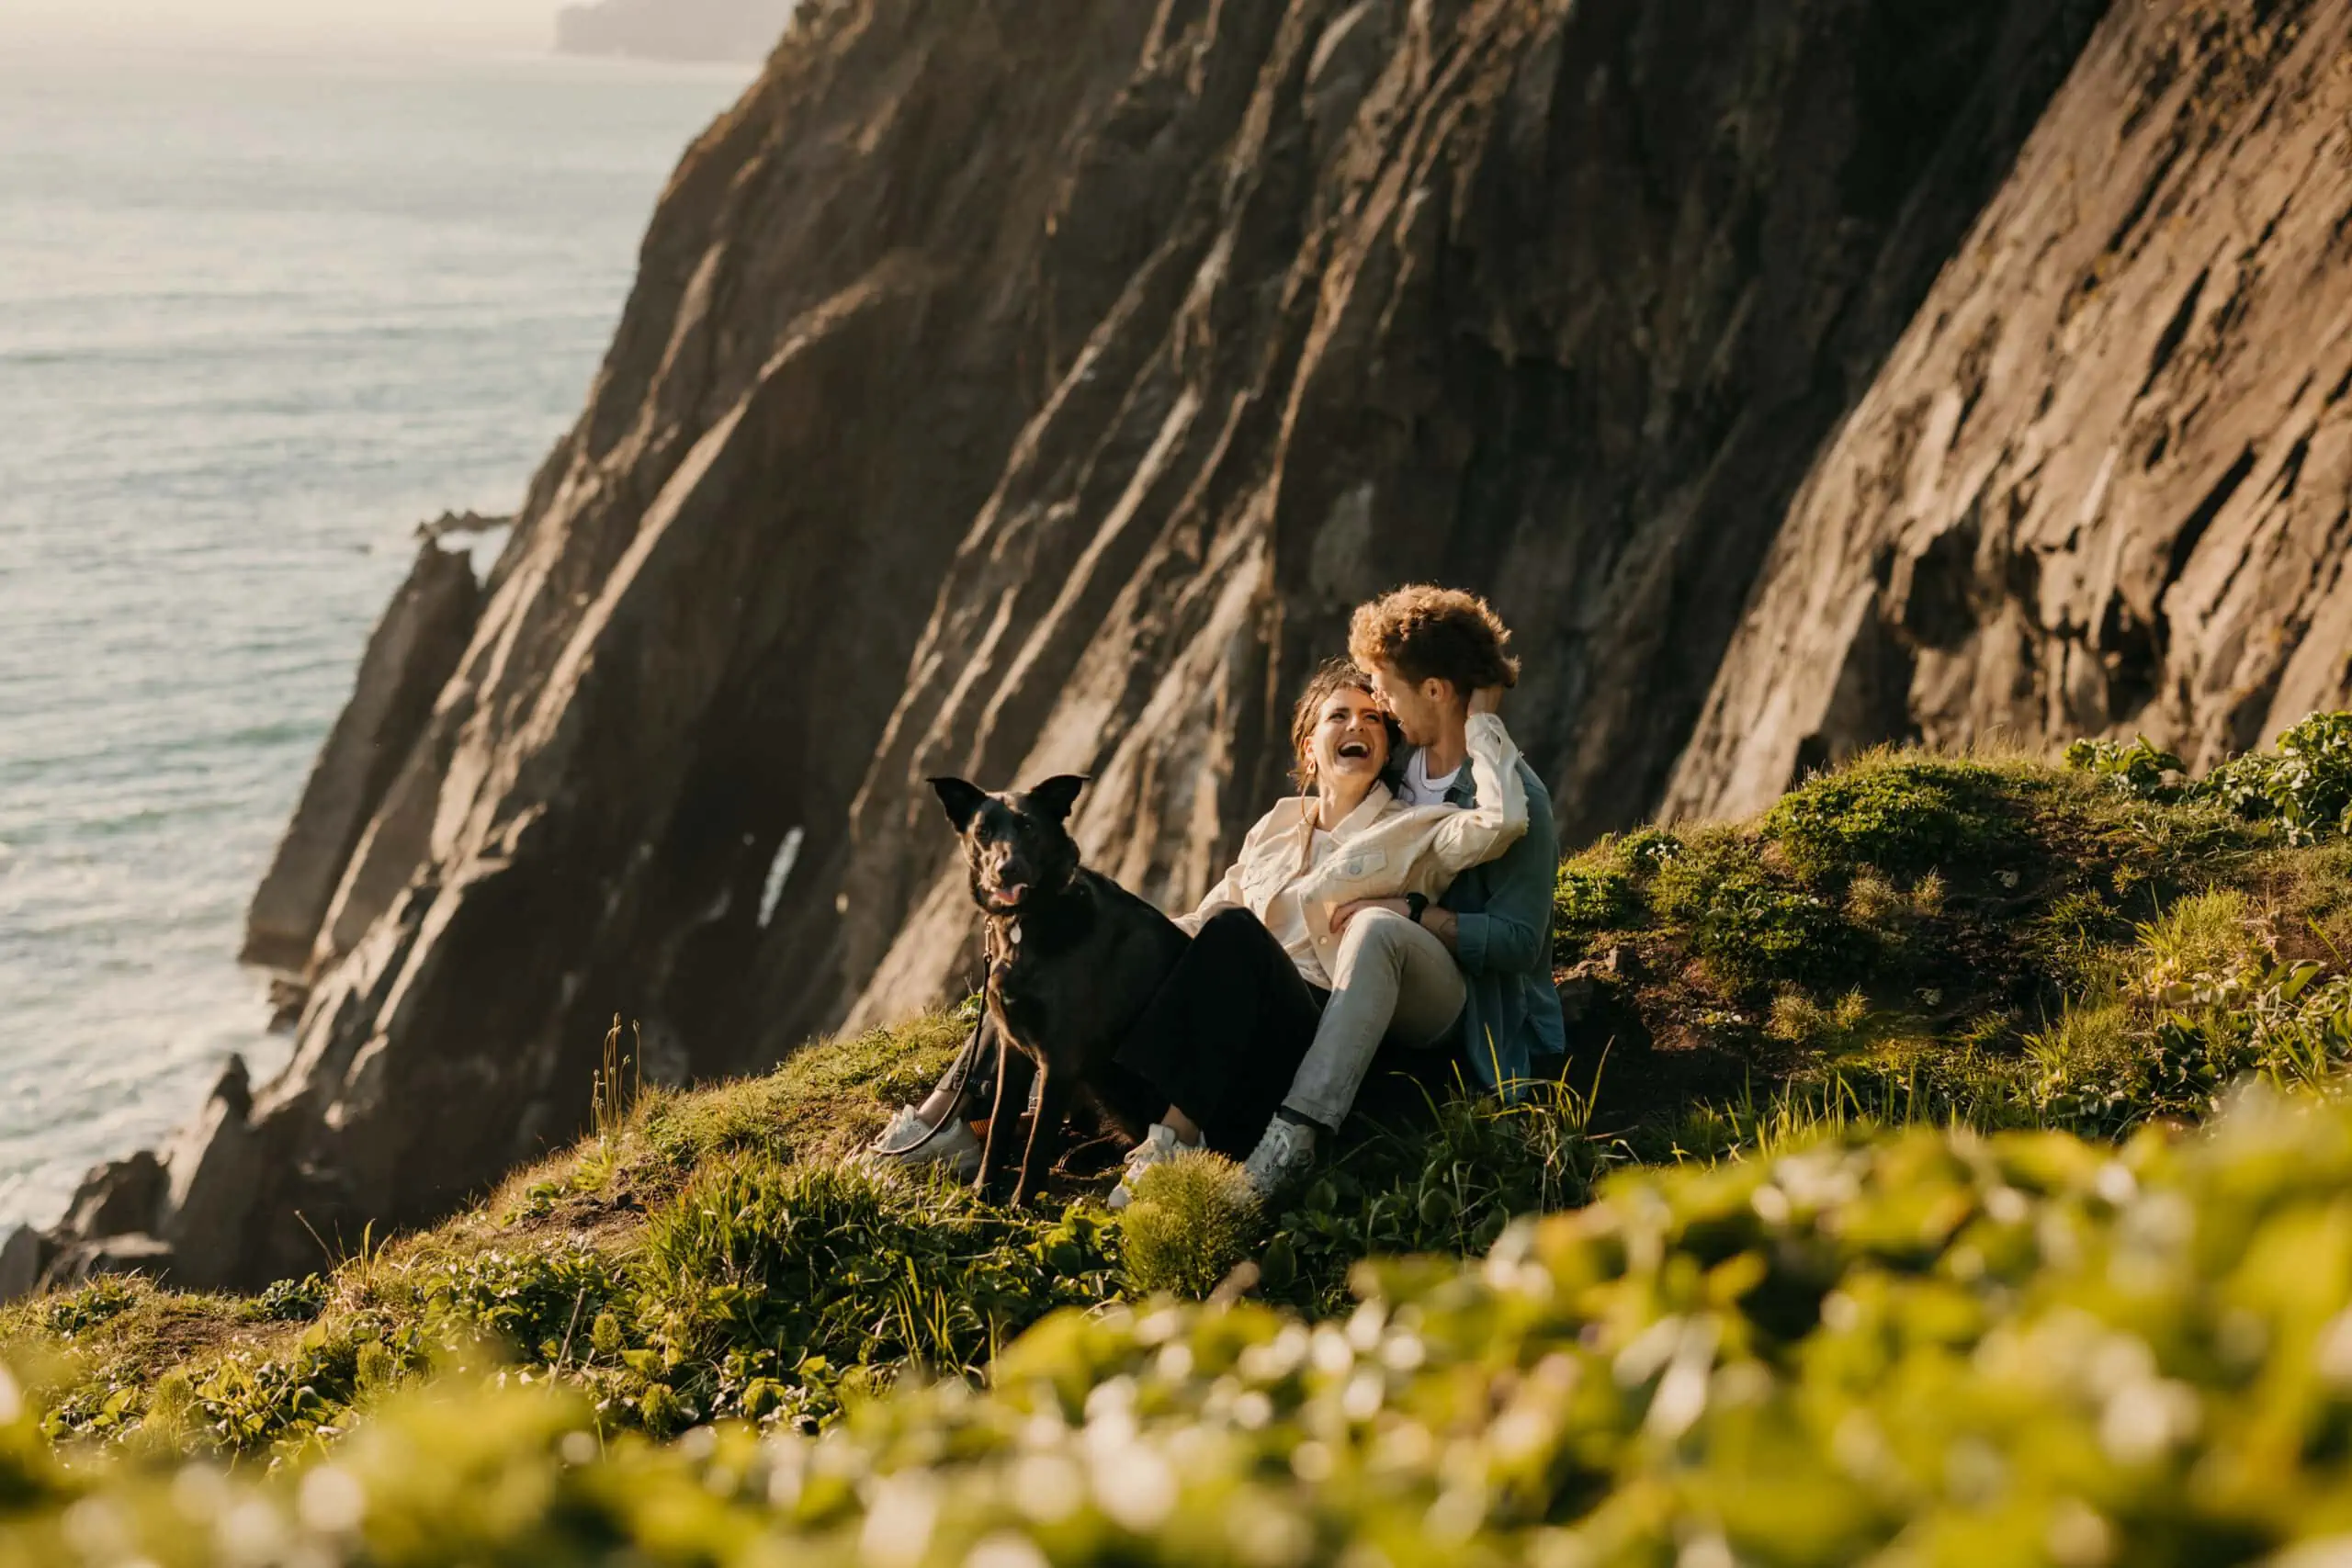 A couple and their dog enjoy the Oregon coast.